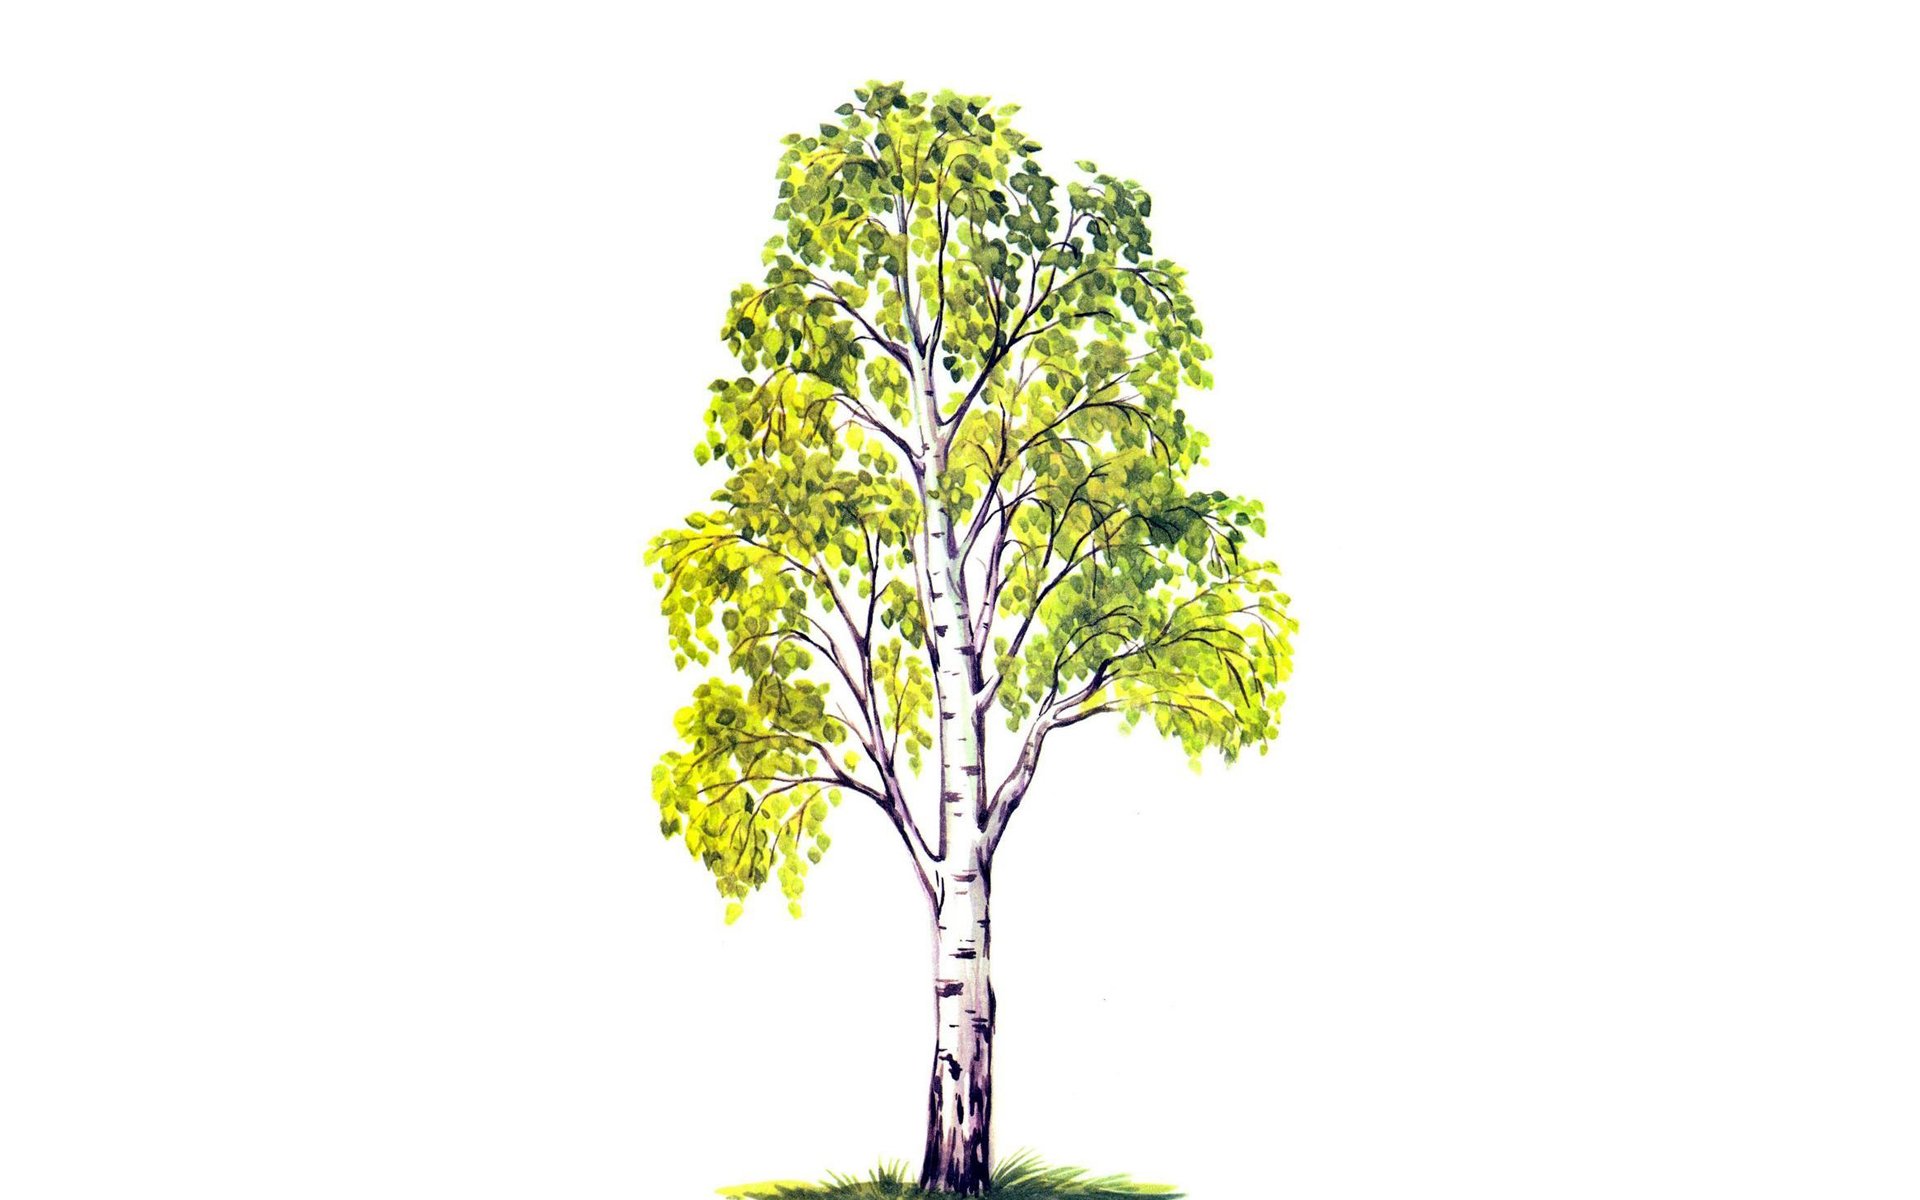 árbol abedul follaje hojas patrón fondo blanco verde